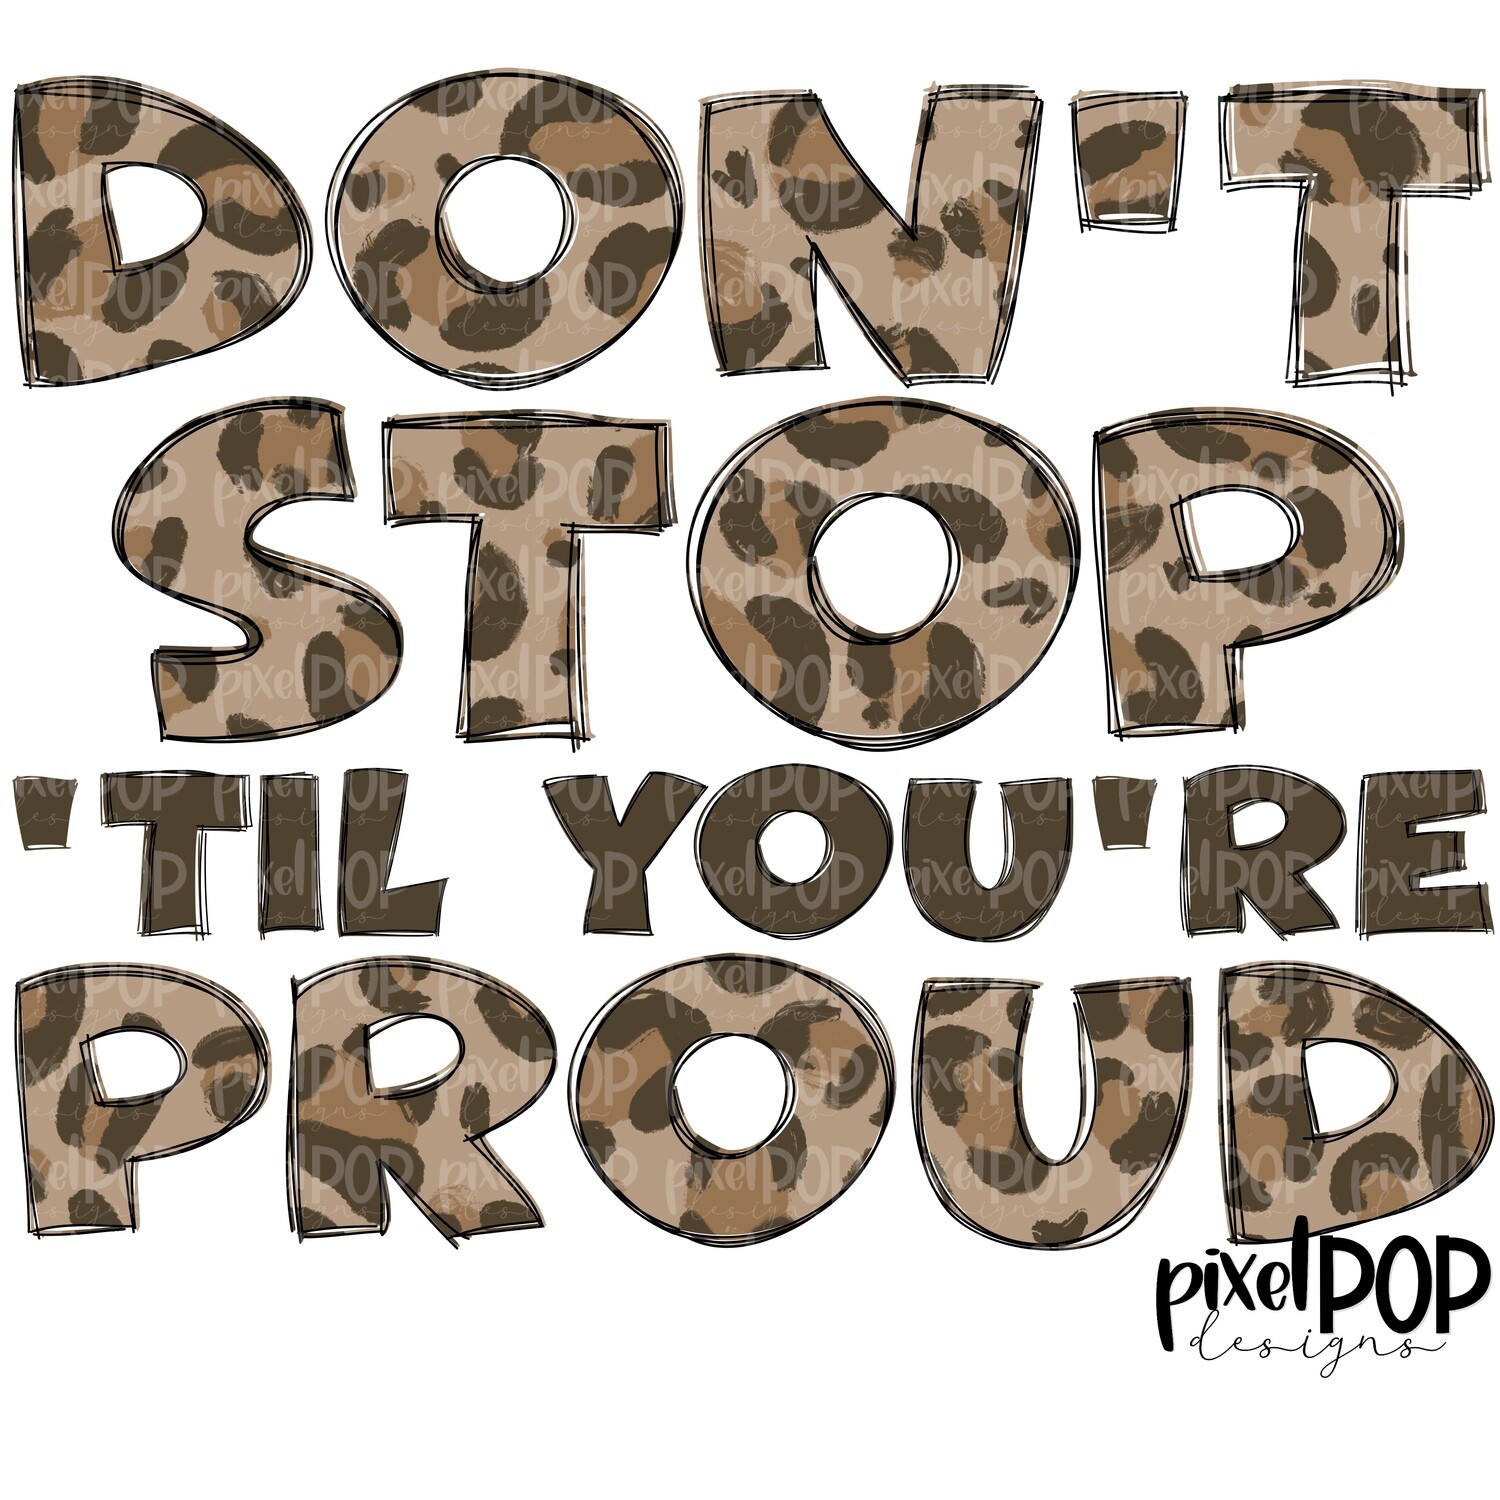 Don't Stop 'Til You're Proud Leopard PNG | Inspirational Art PNG | Sublimation PNG | Digital Download | Printable Art | Clip Art